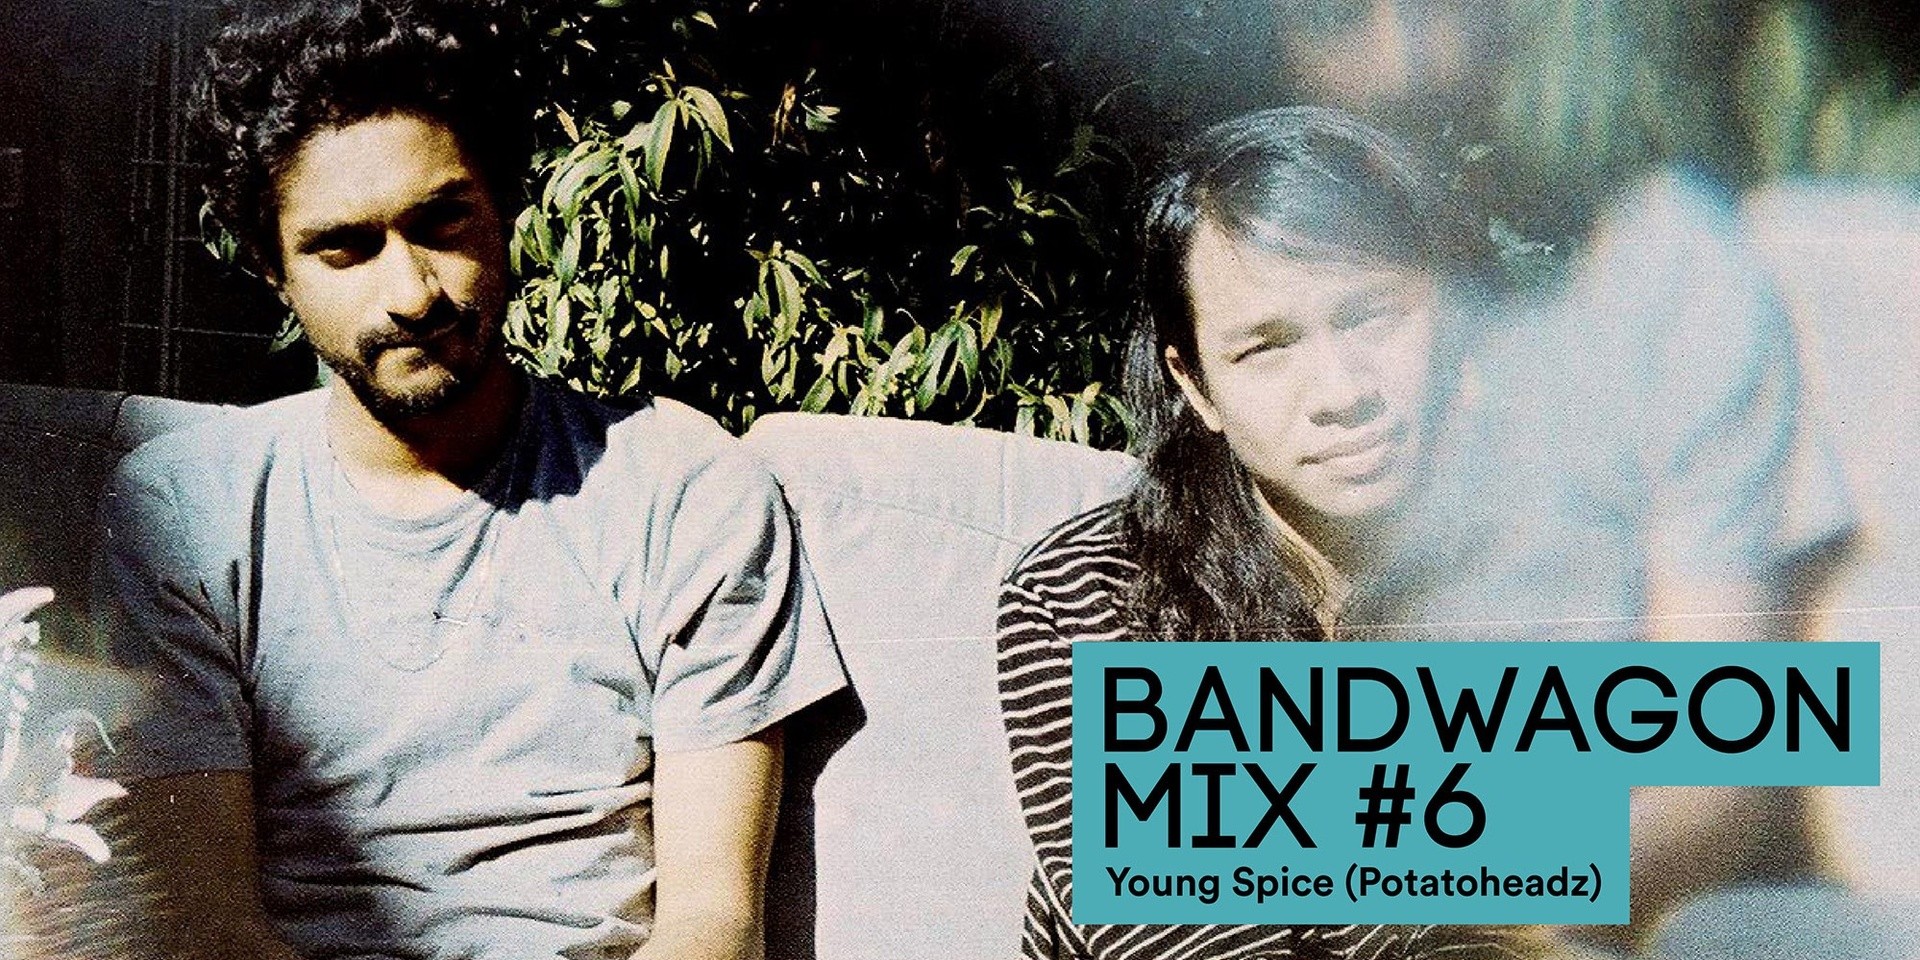 Bandwagon Mix #6: Young Spice (Potatoheadz)